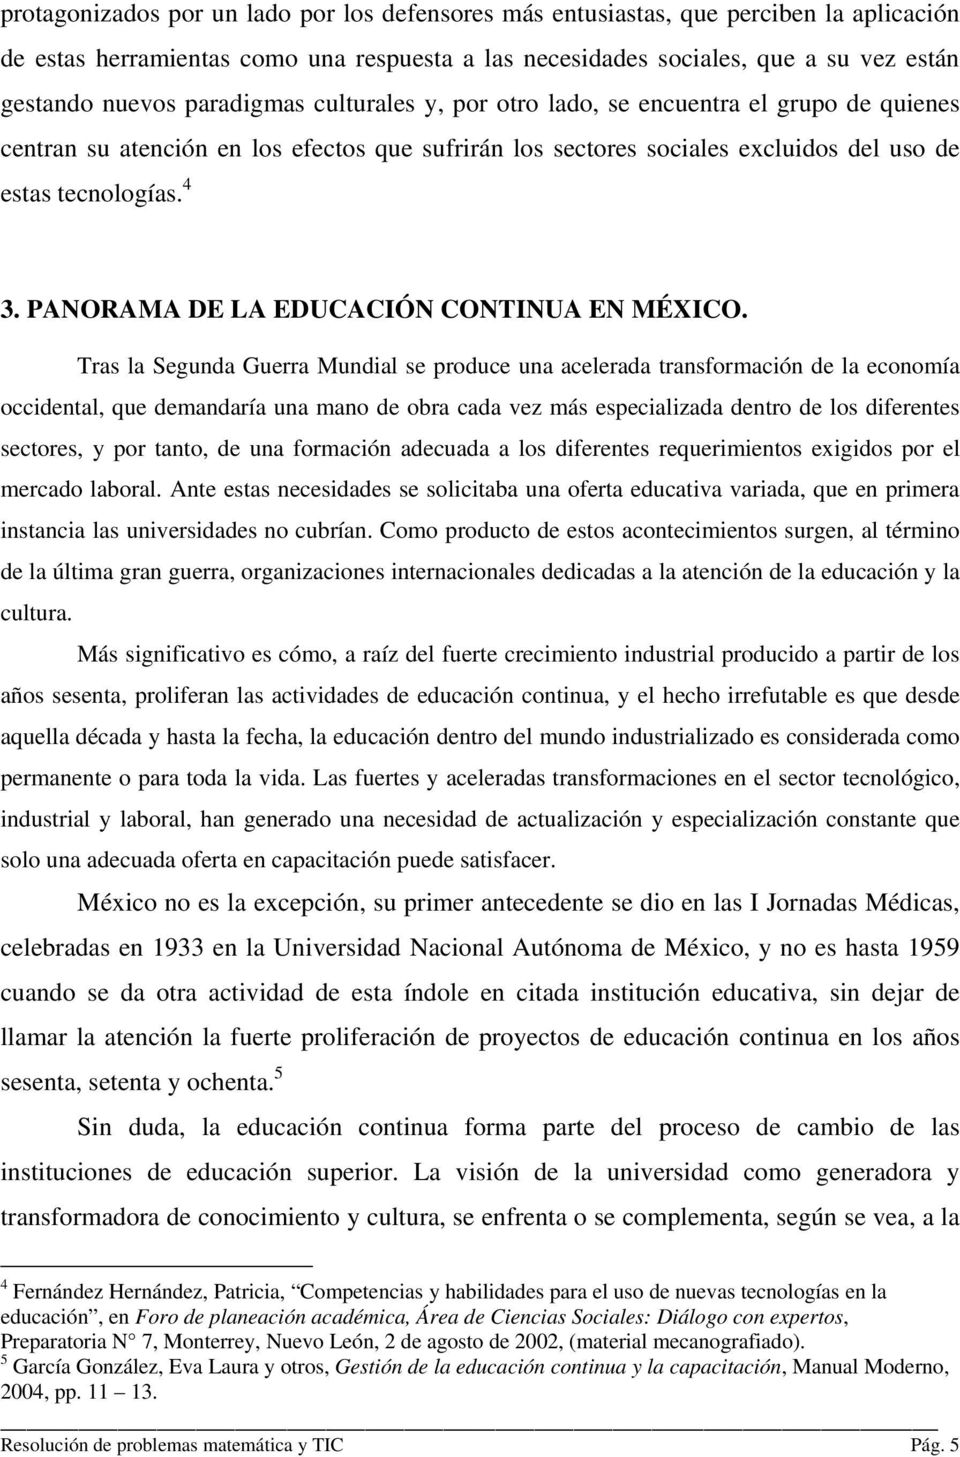 PANORAMA DE LA EDUCACIÓN CONTINUA EN MÉXICO.